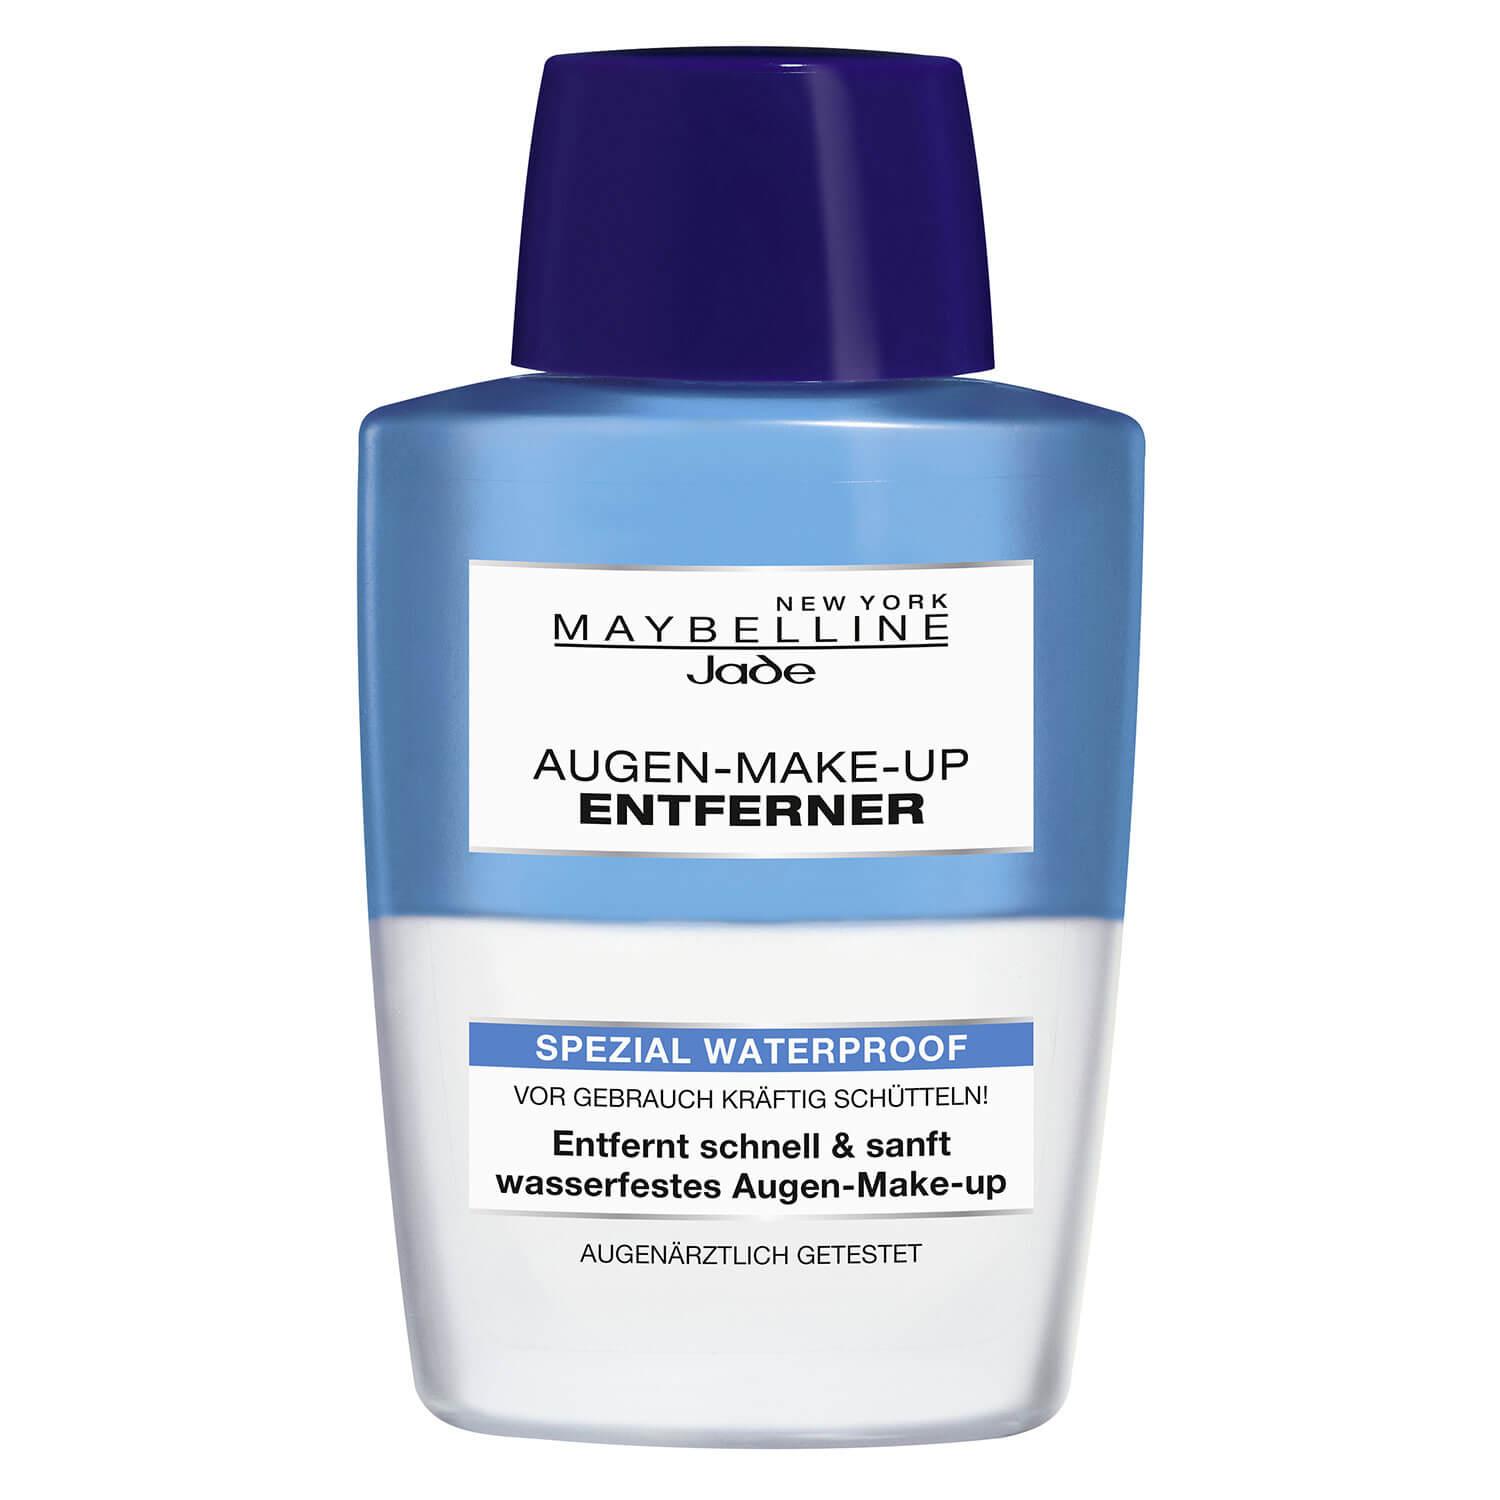 Maybelline NY Teint - Augen-Make-Up Entferner Spezial Waterproof